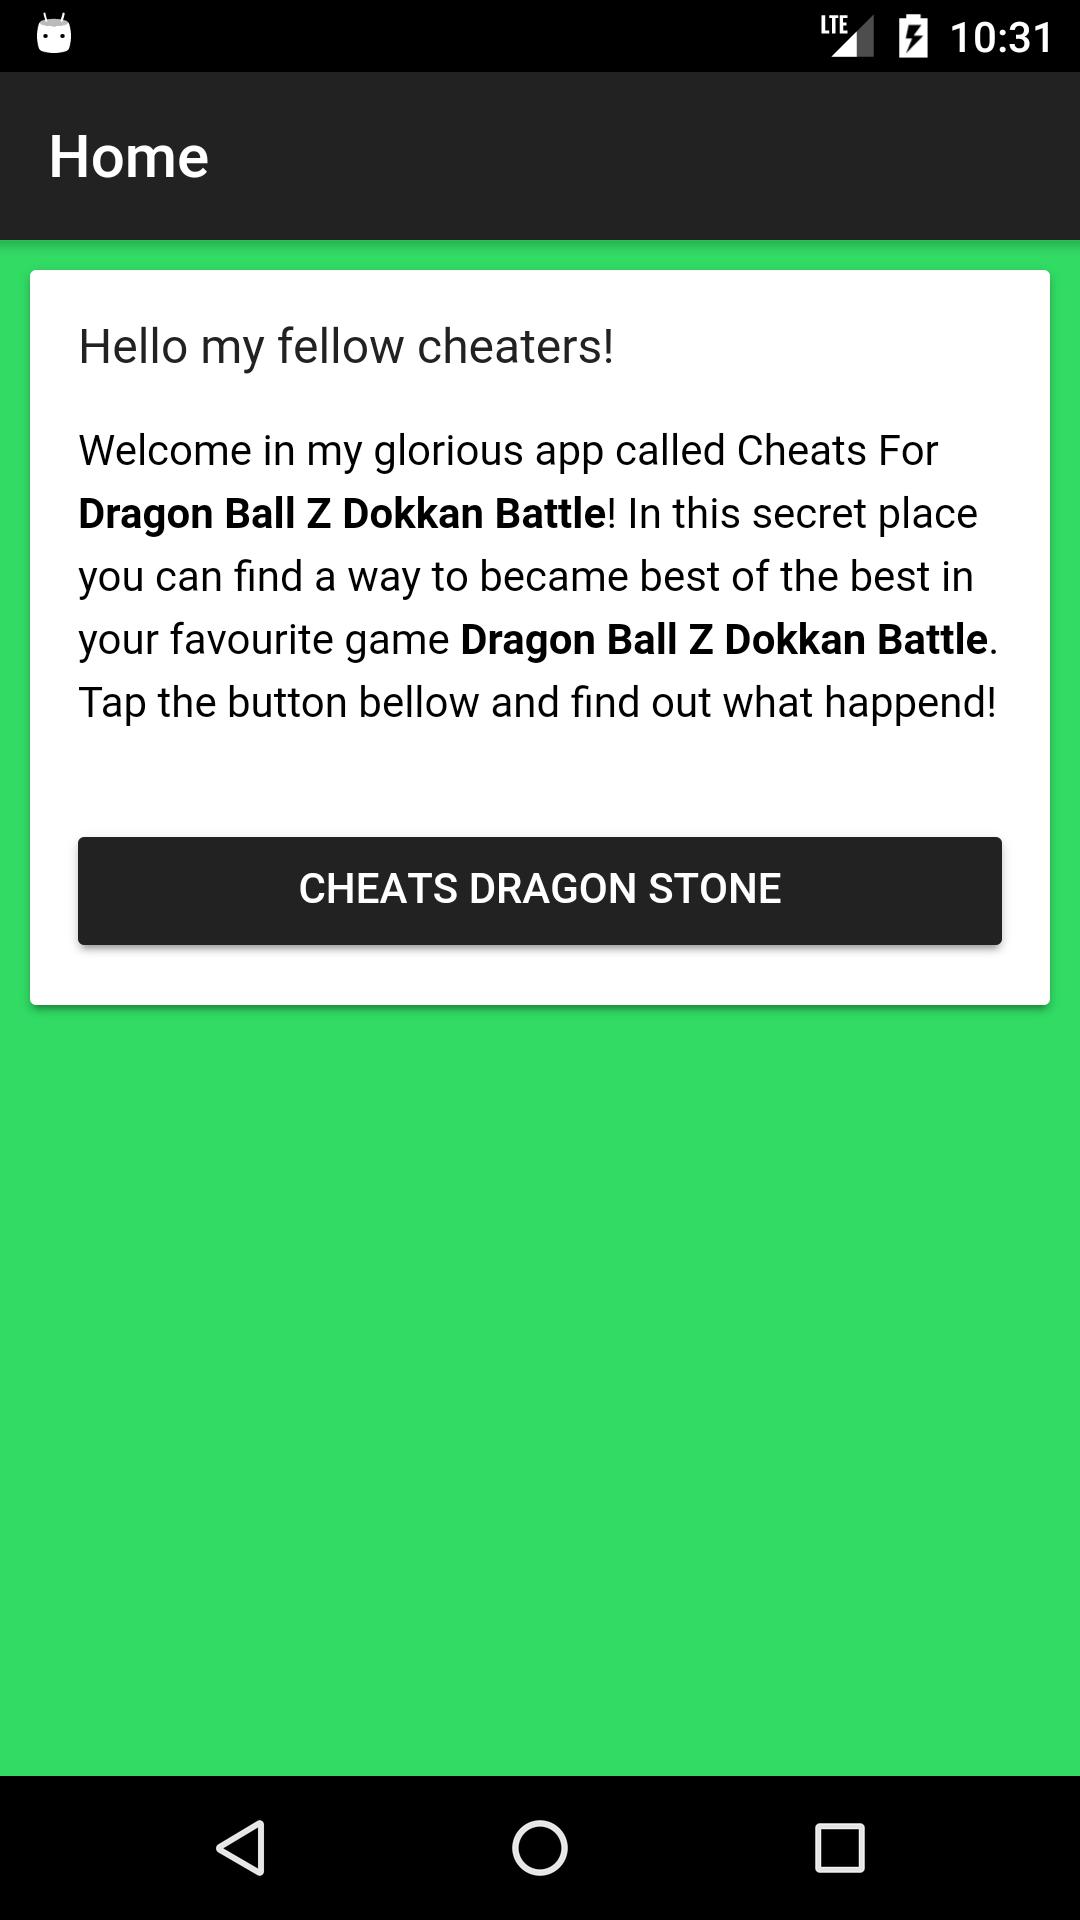 Cheats For Dragon Ball Z Dokkan Battle fÃ¼r Android - APK ... - 